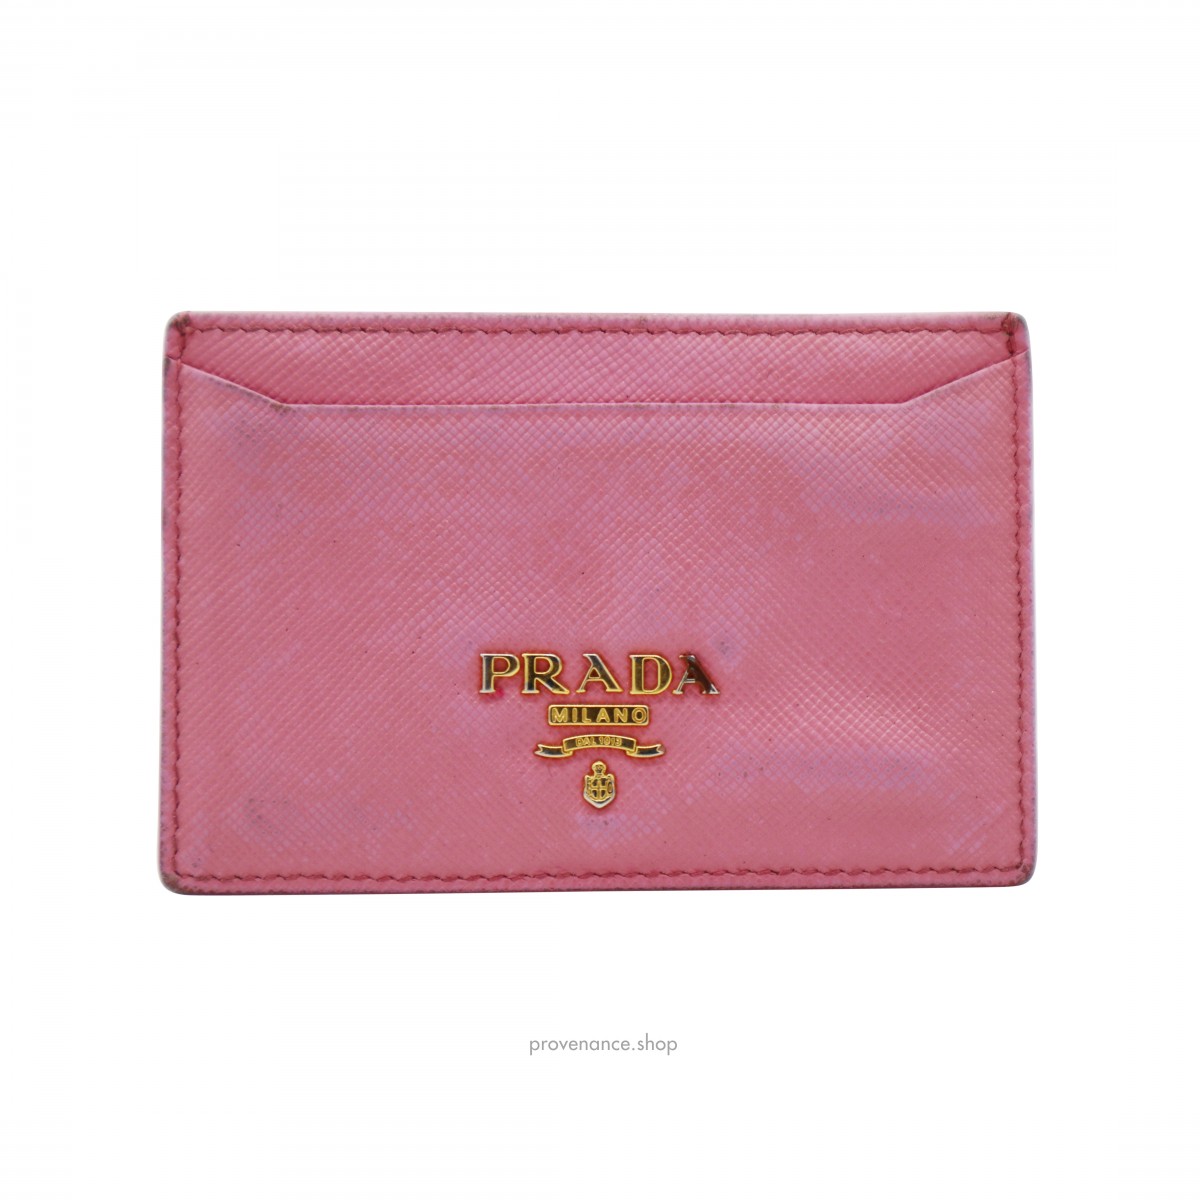 Prada Cardholder Wallet - Pink Saffiano Leather - 1